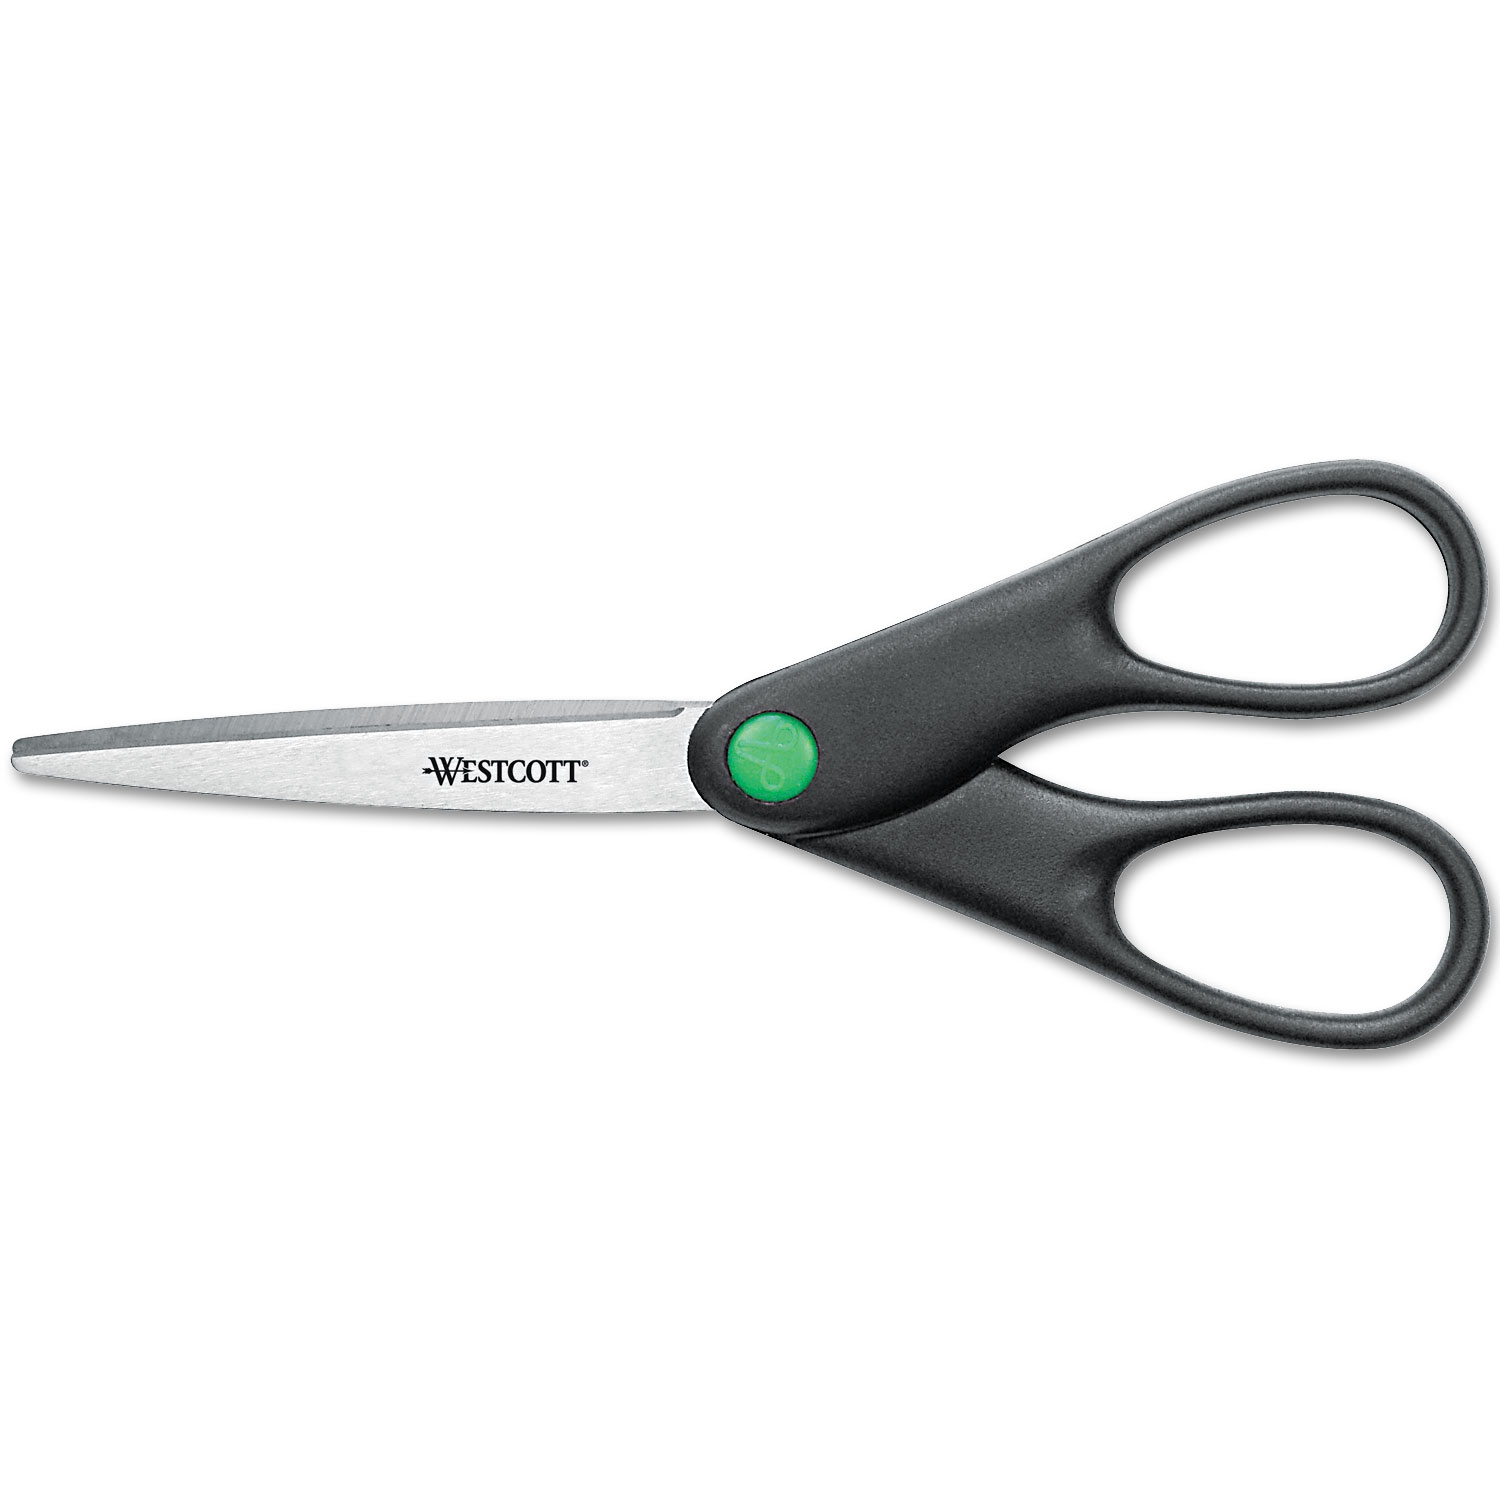 Westcott ACM44218 KleenEarth Recycled Stainless Steel Scissors, 7" Long, Black